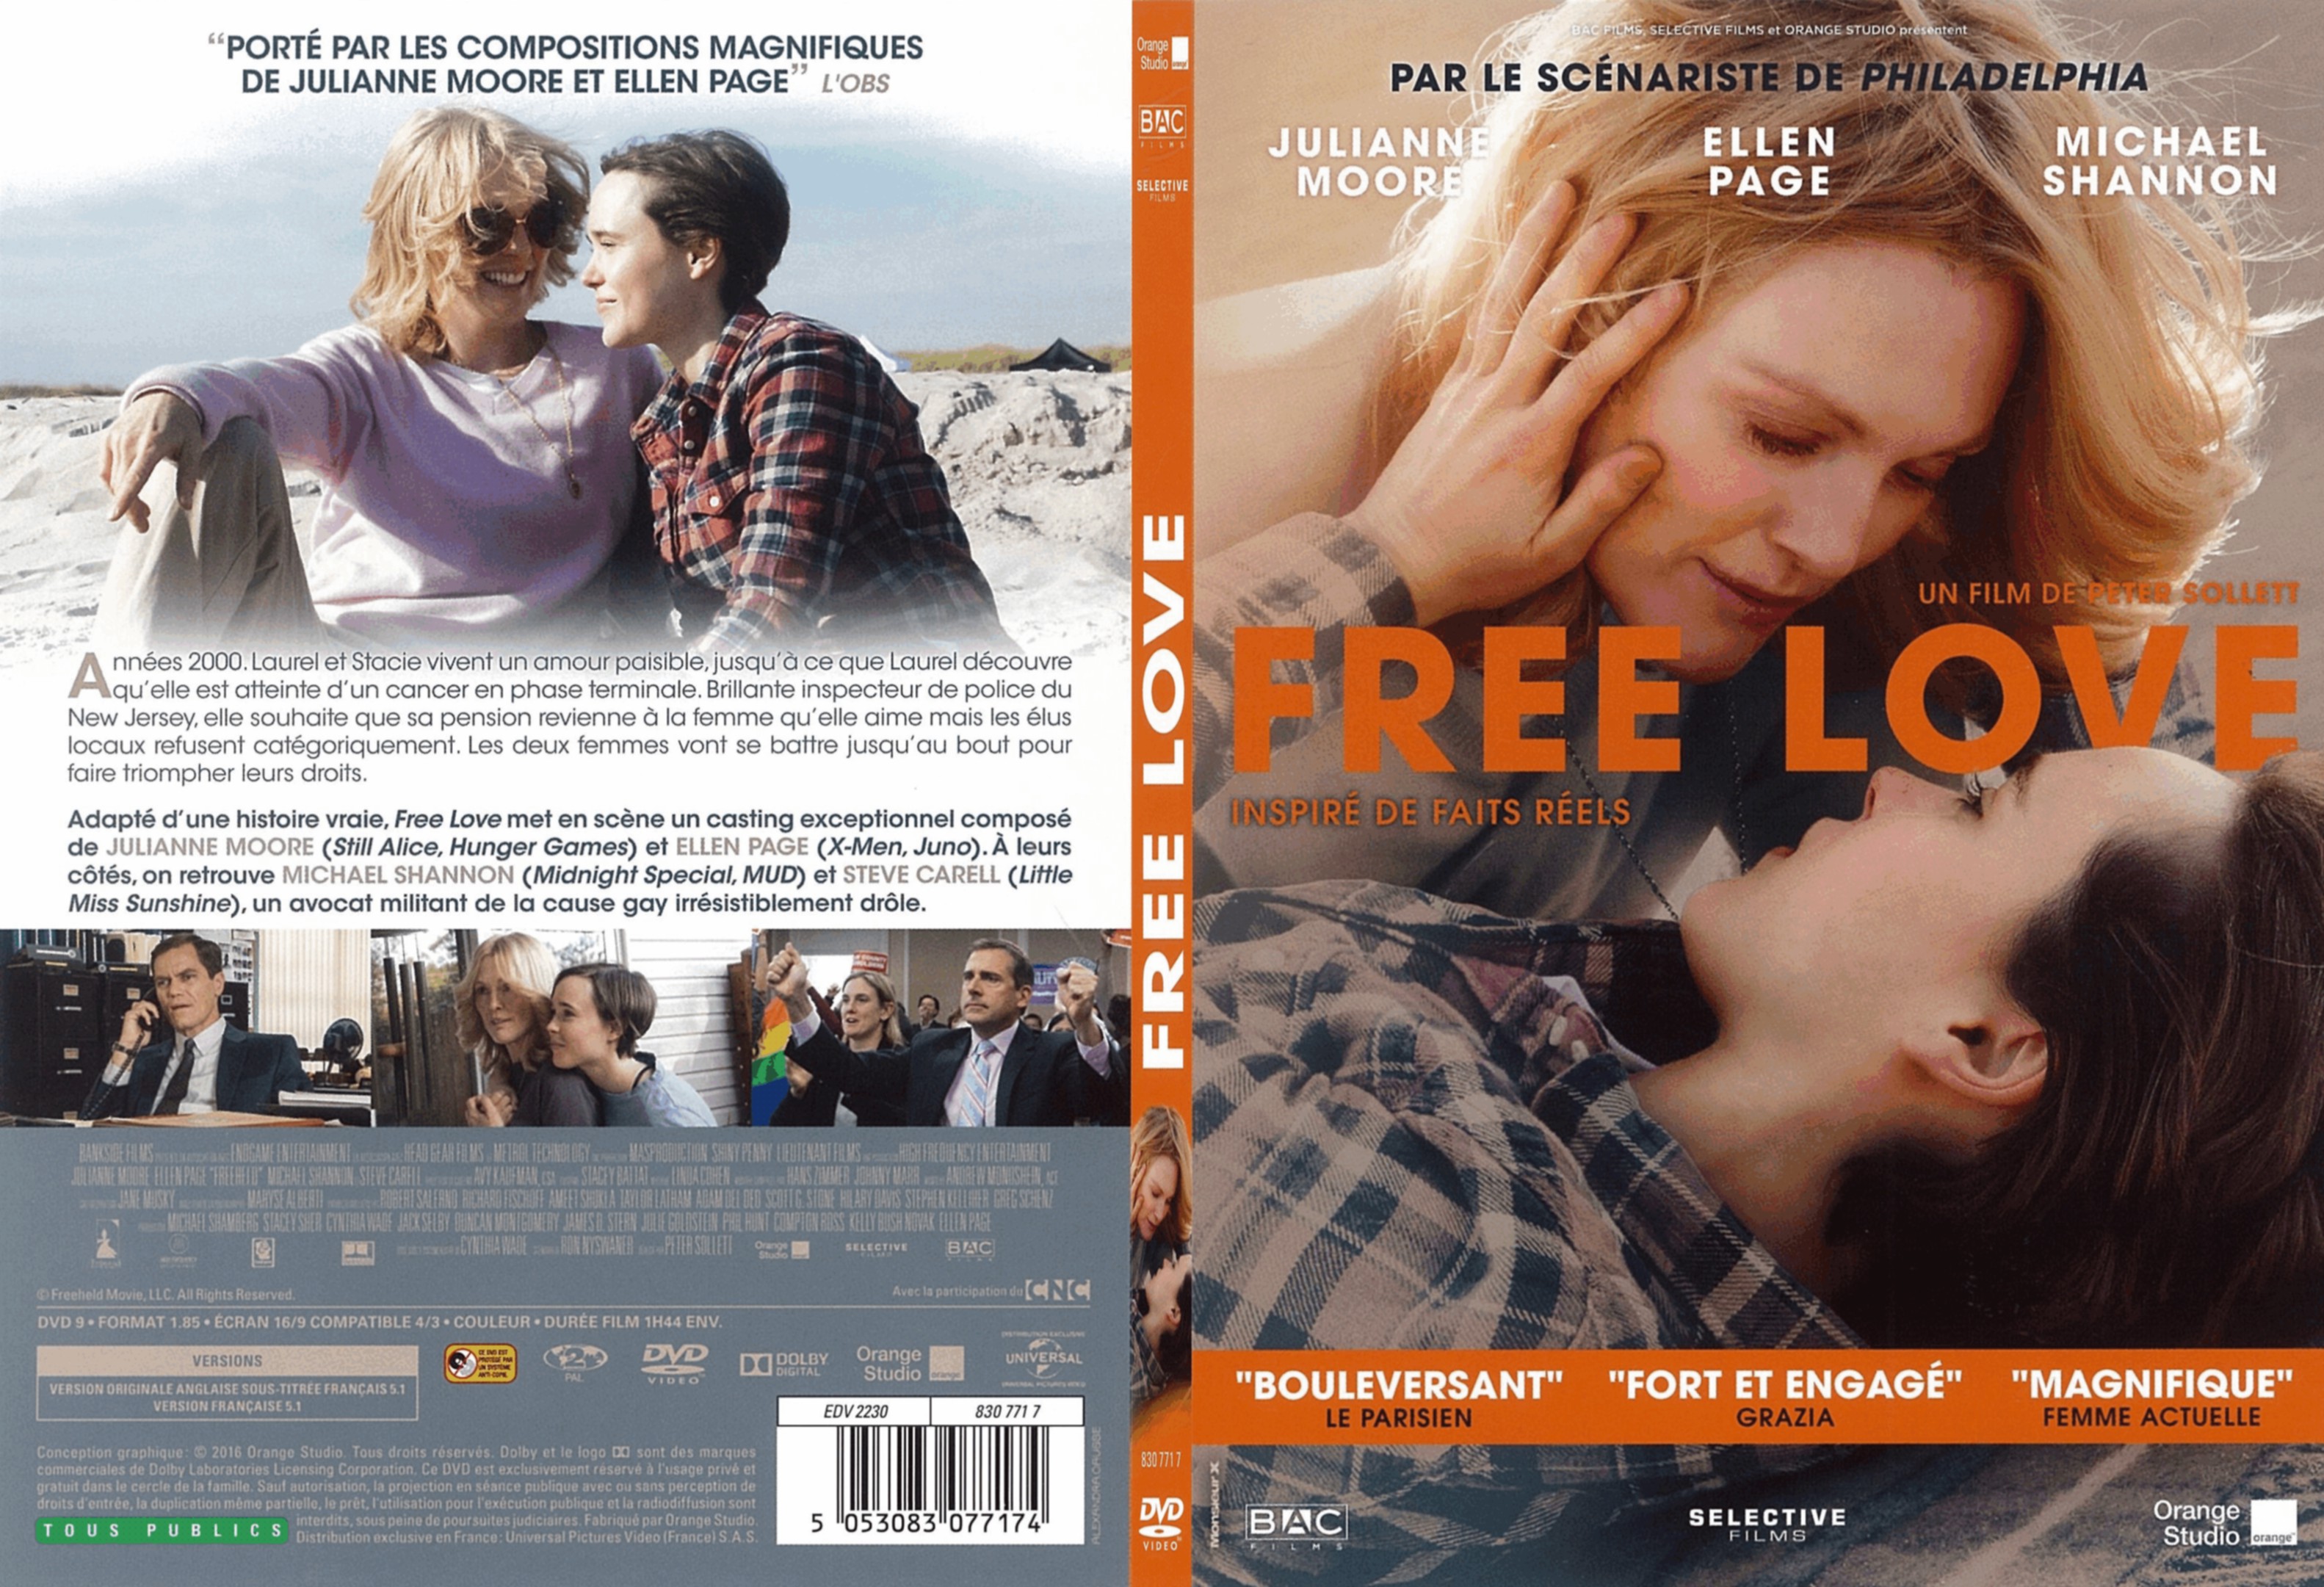 Jaquette DVD Free love - SLIM